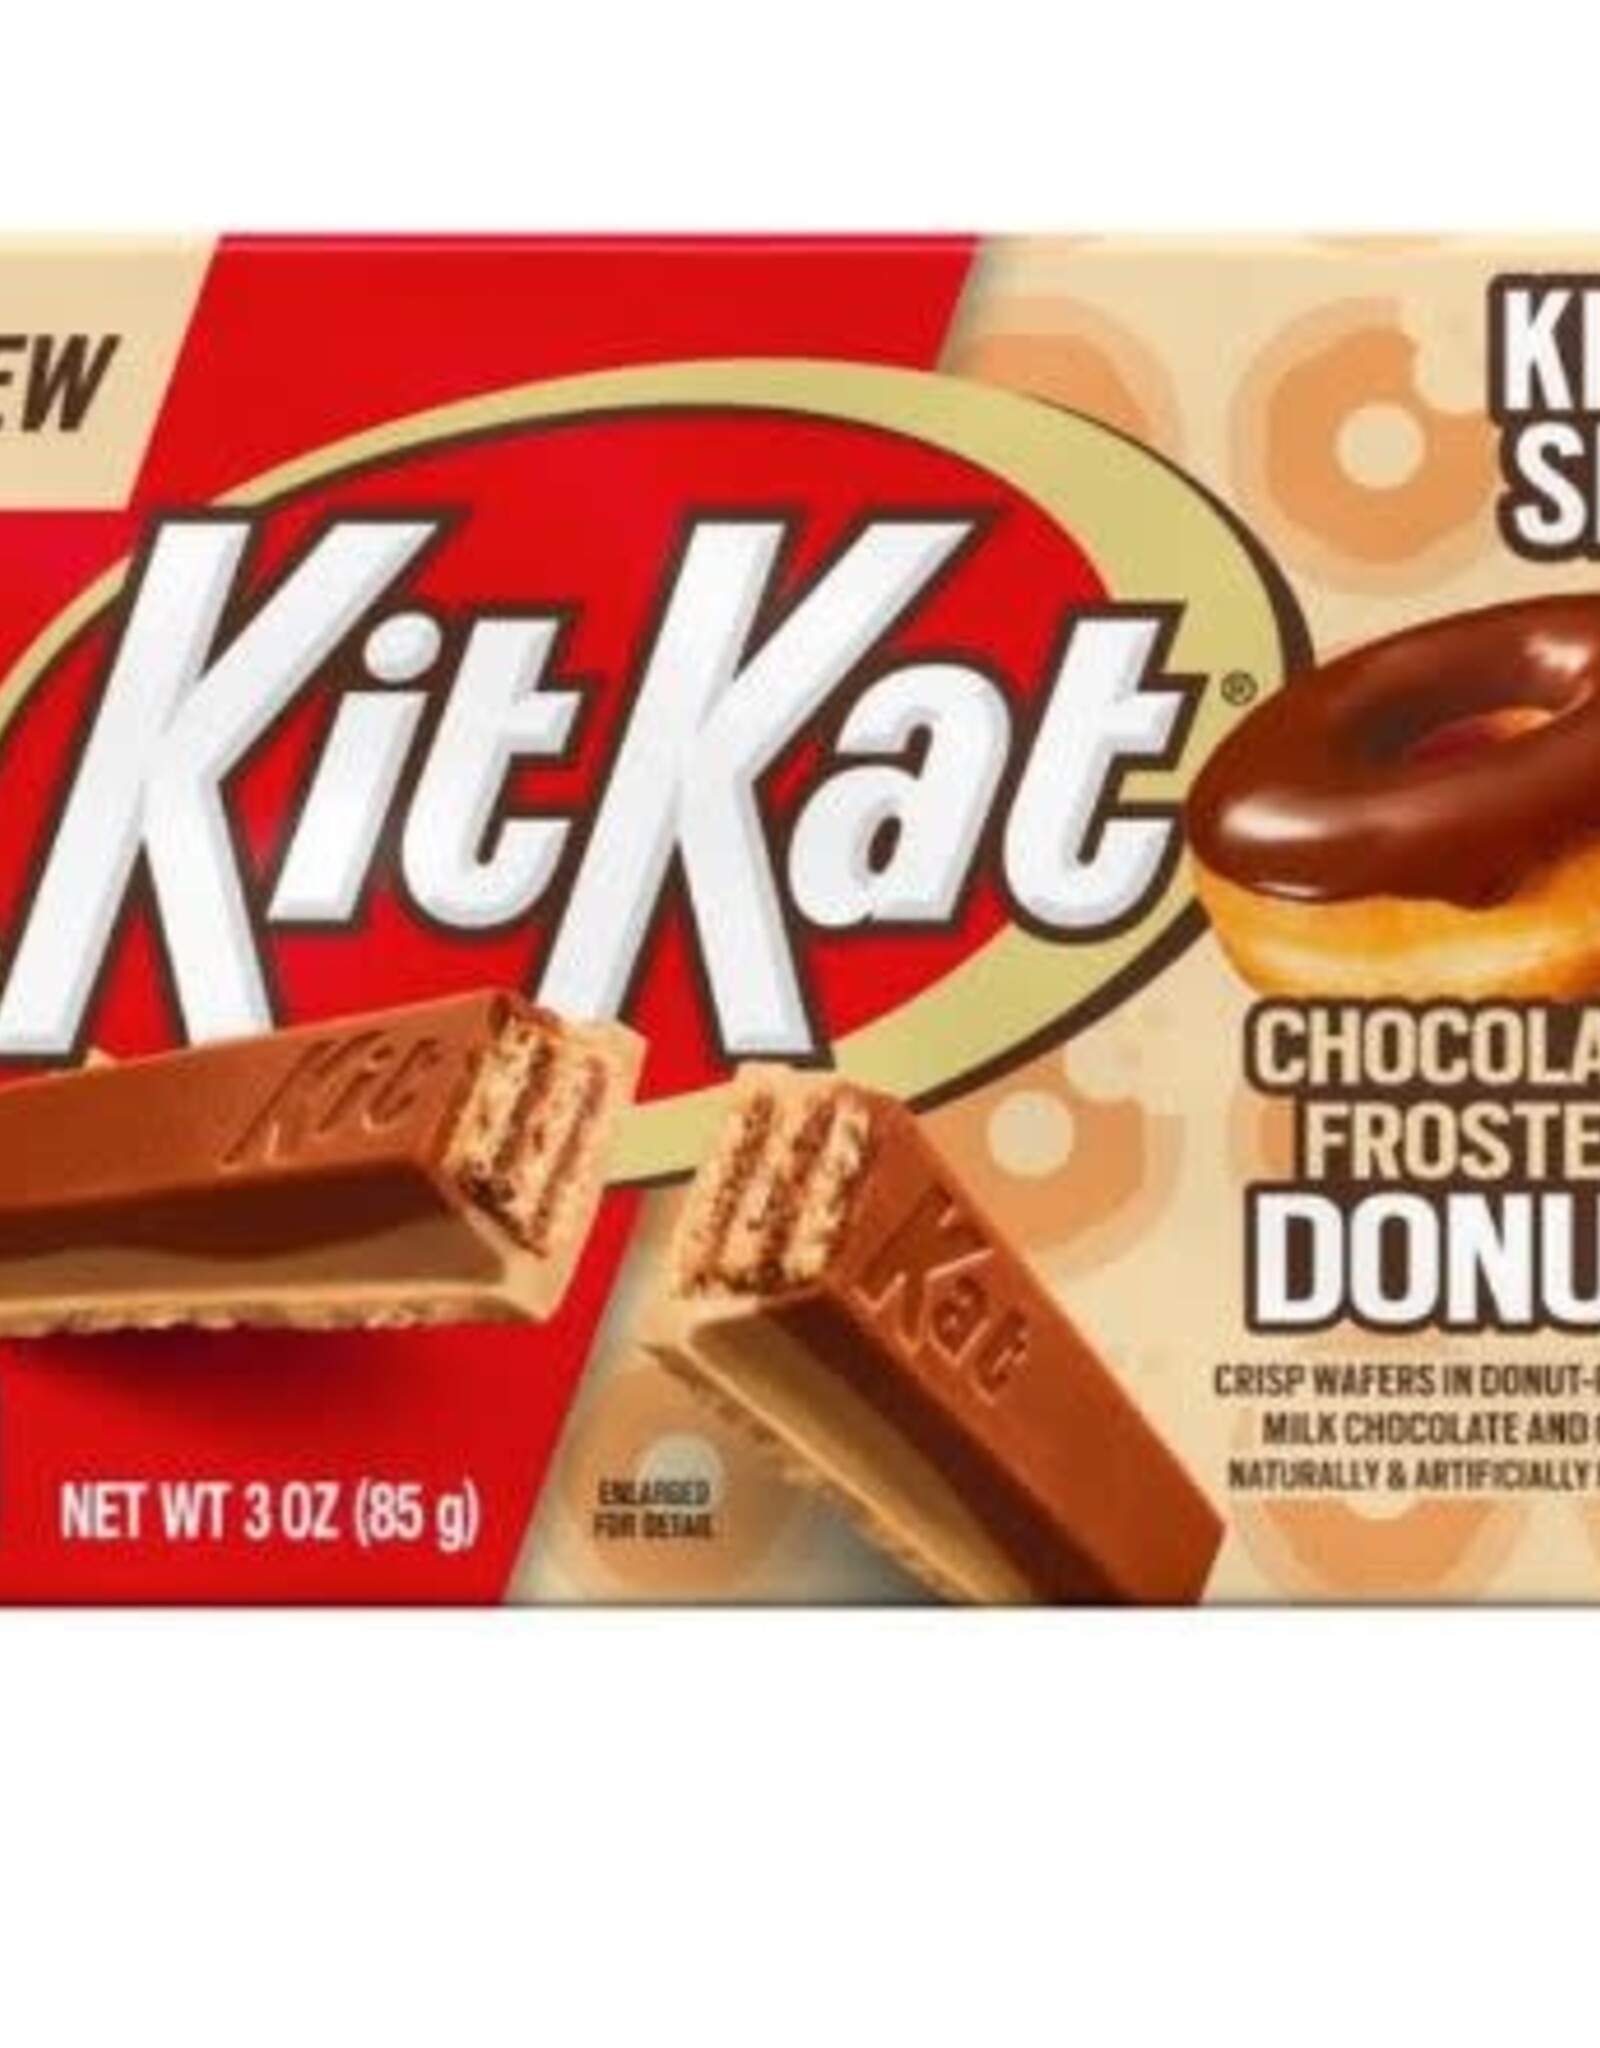 Kit Kat Kit Kat Chocolate Frosted Donut King Size 3oz